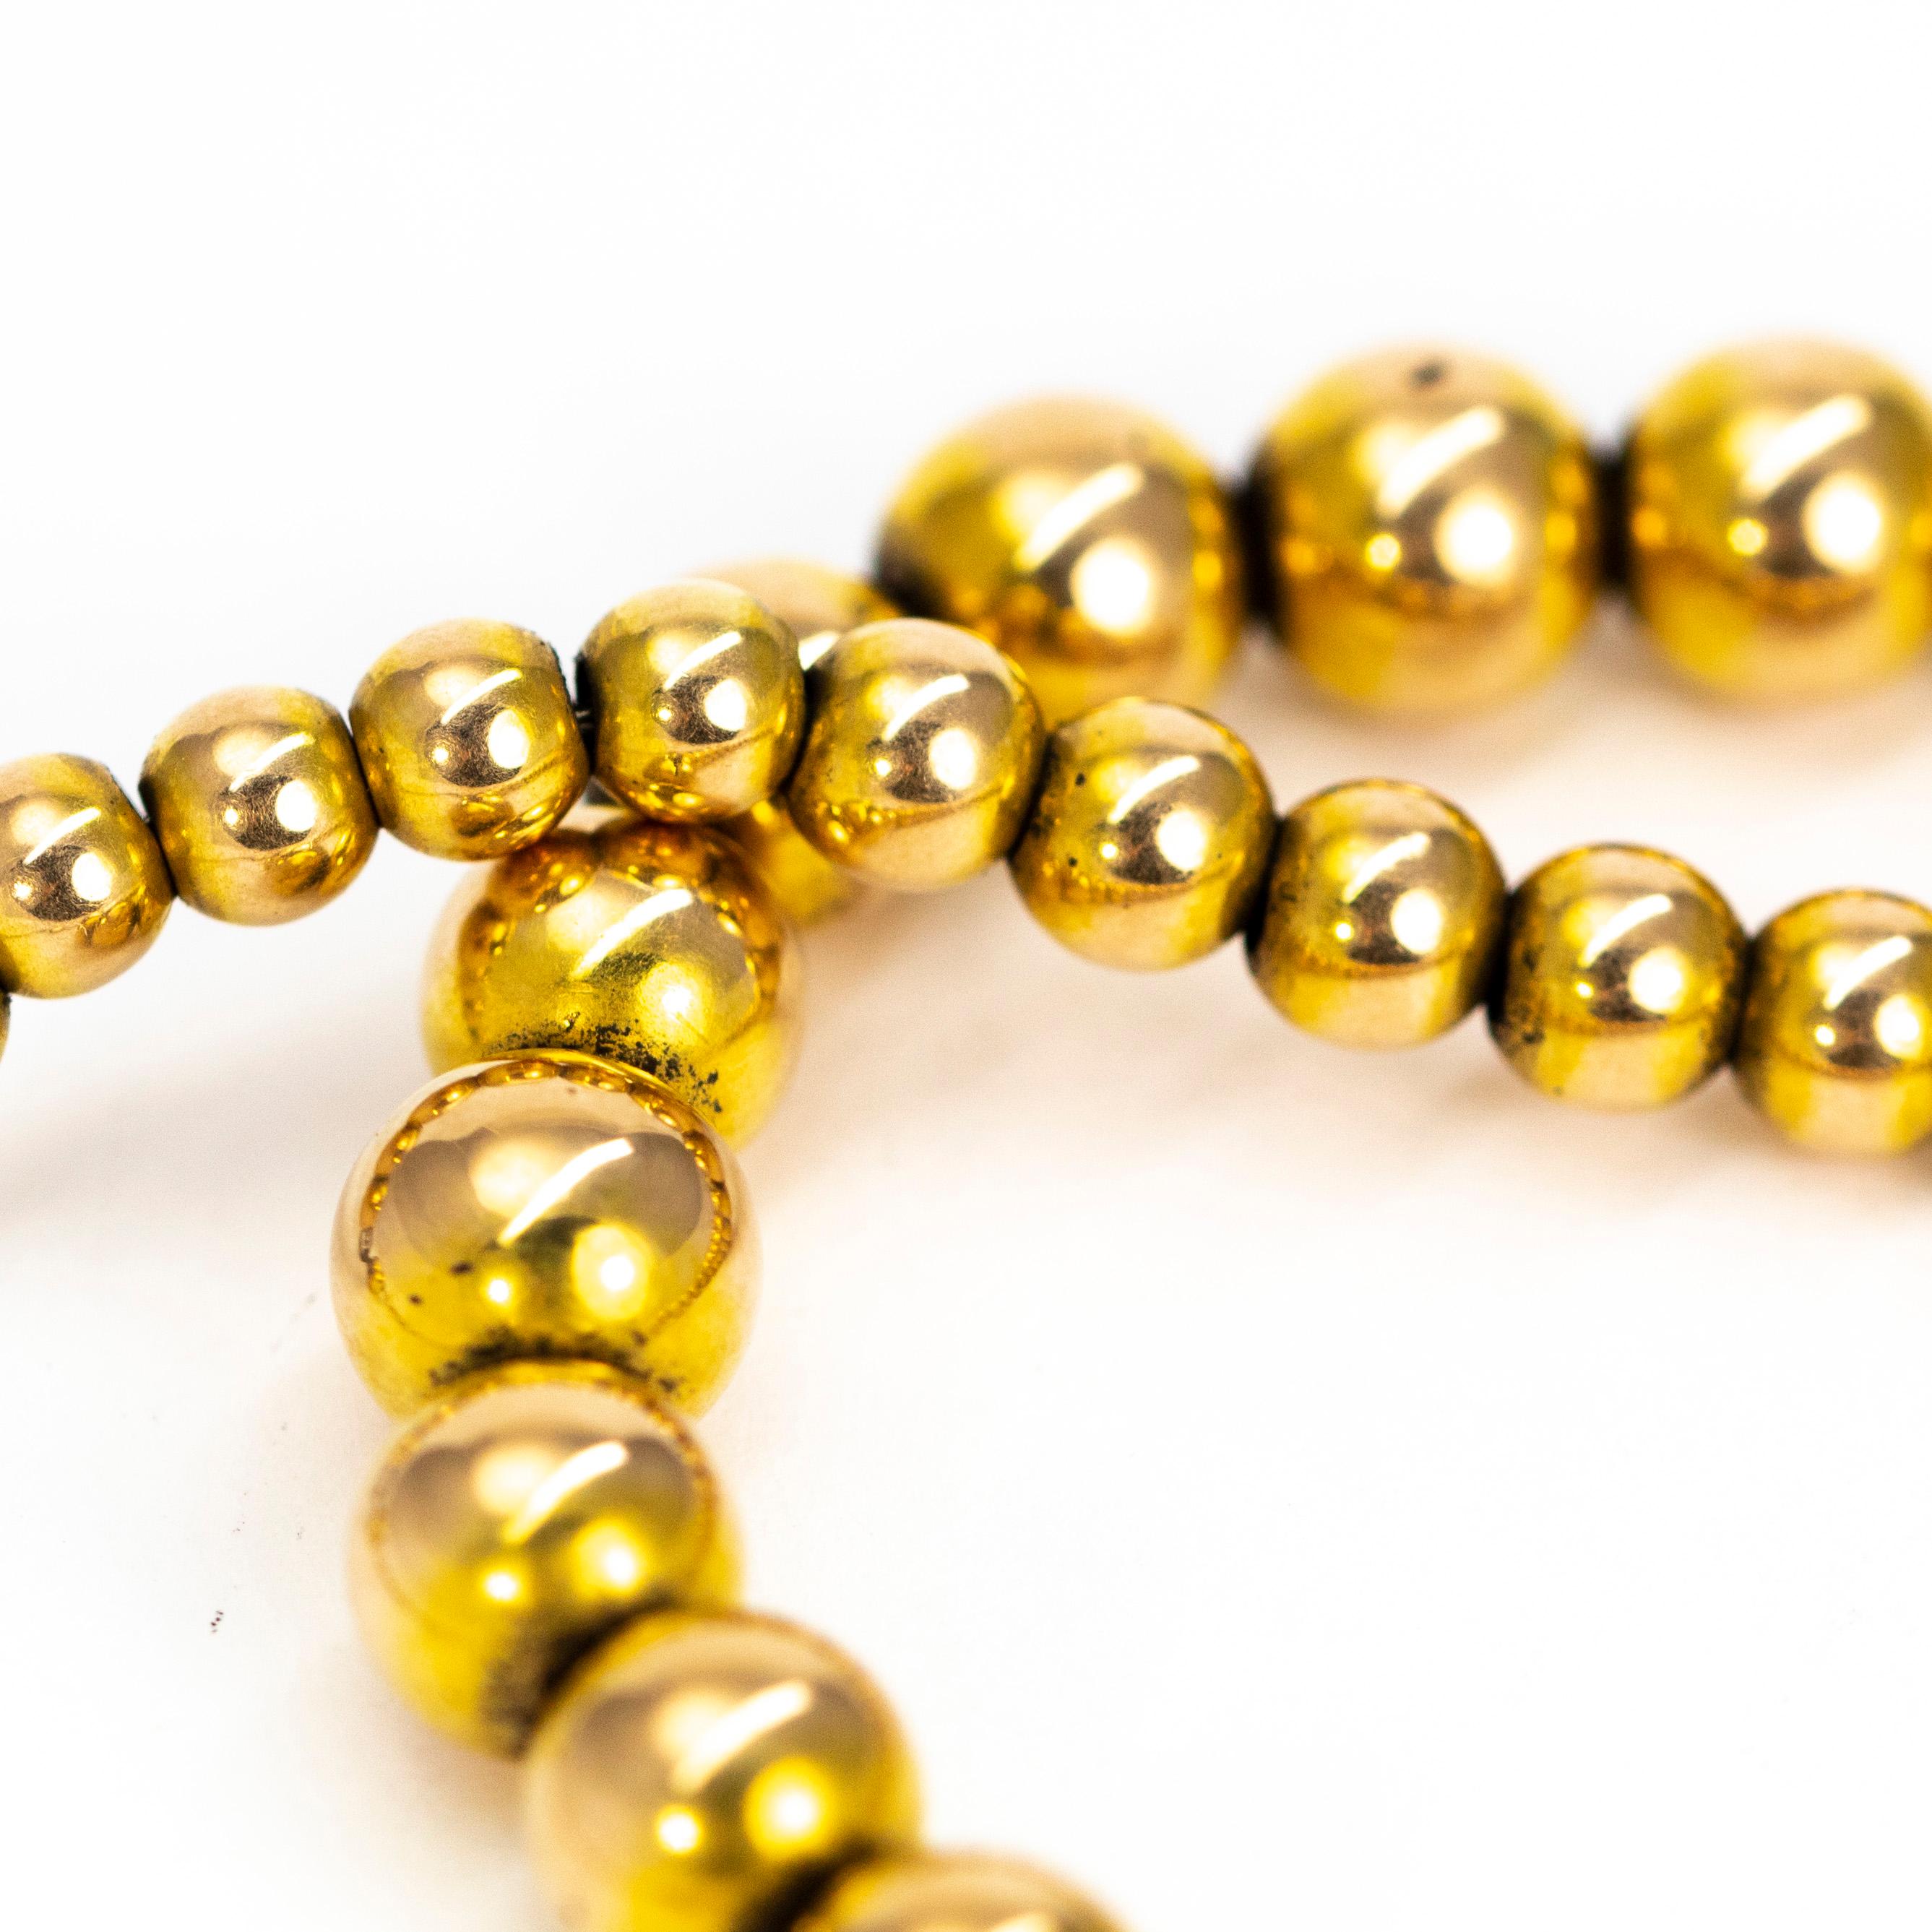 15 carat gold chain